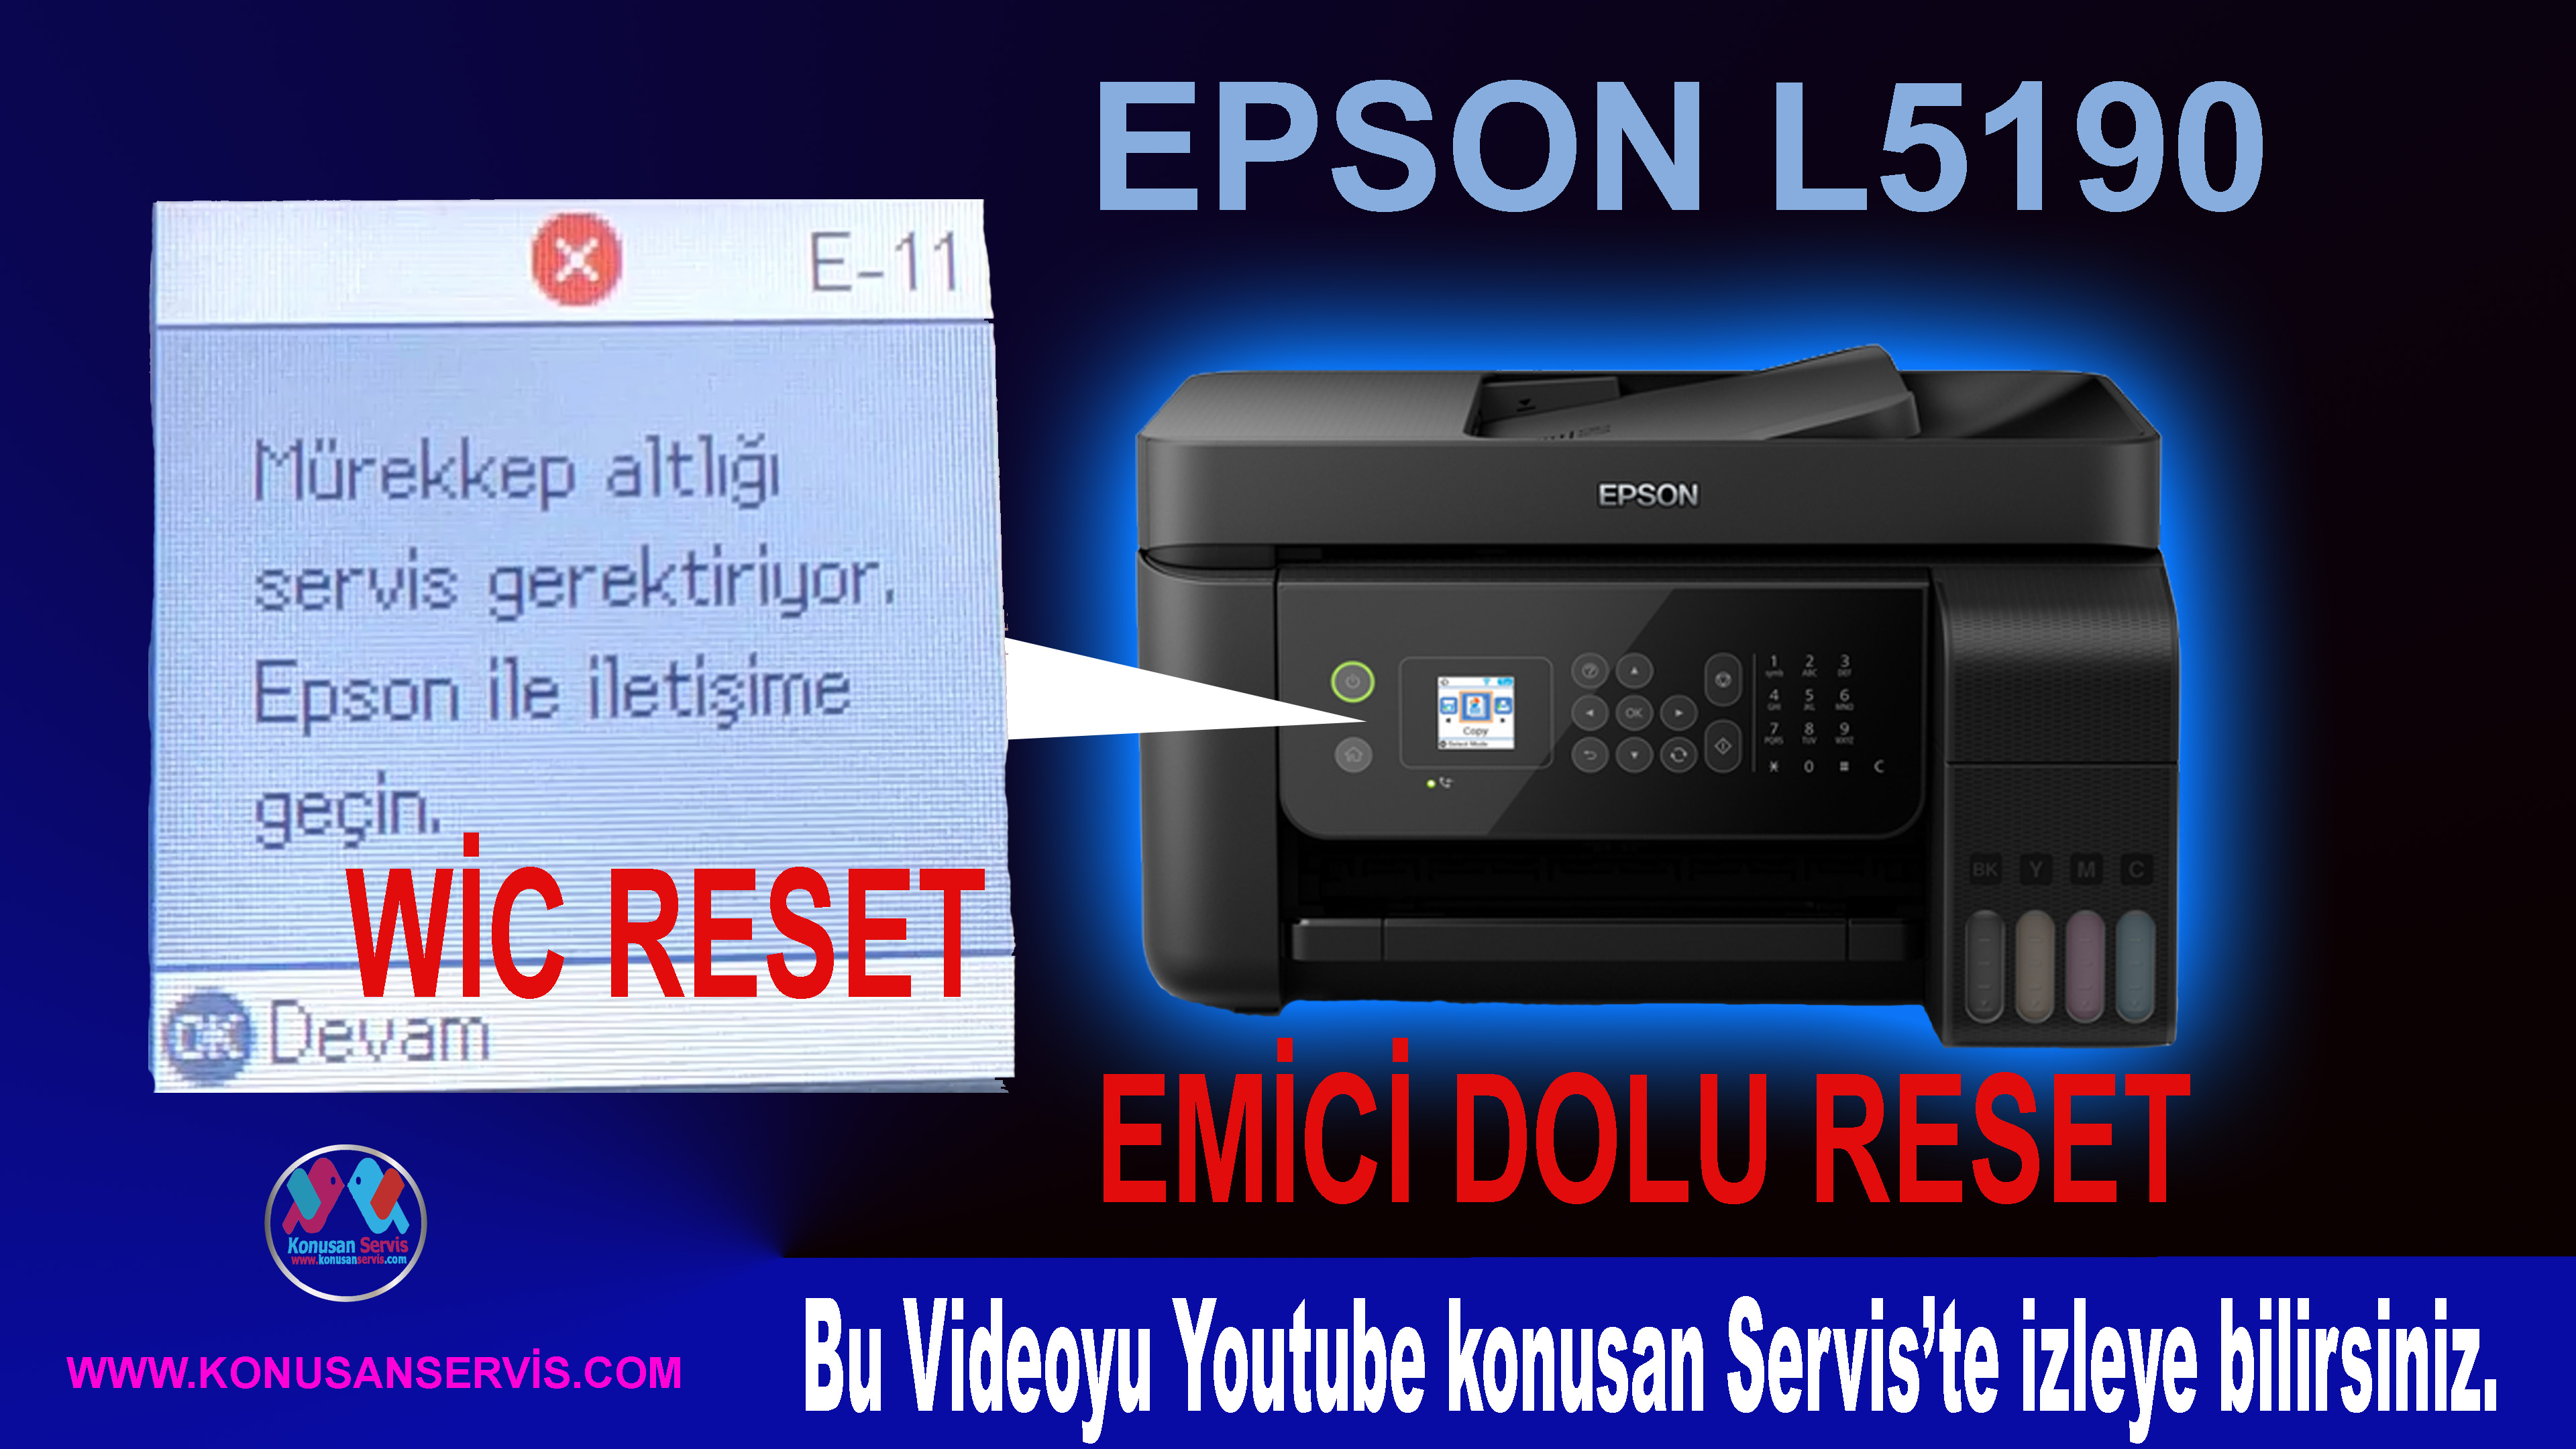 Epson L5190 Atık resetleme - WİC RESET KEY